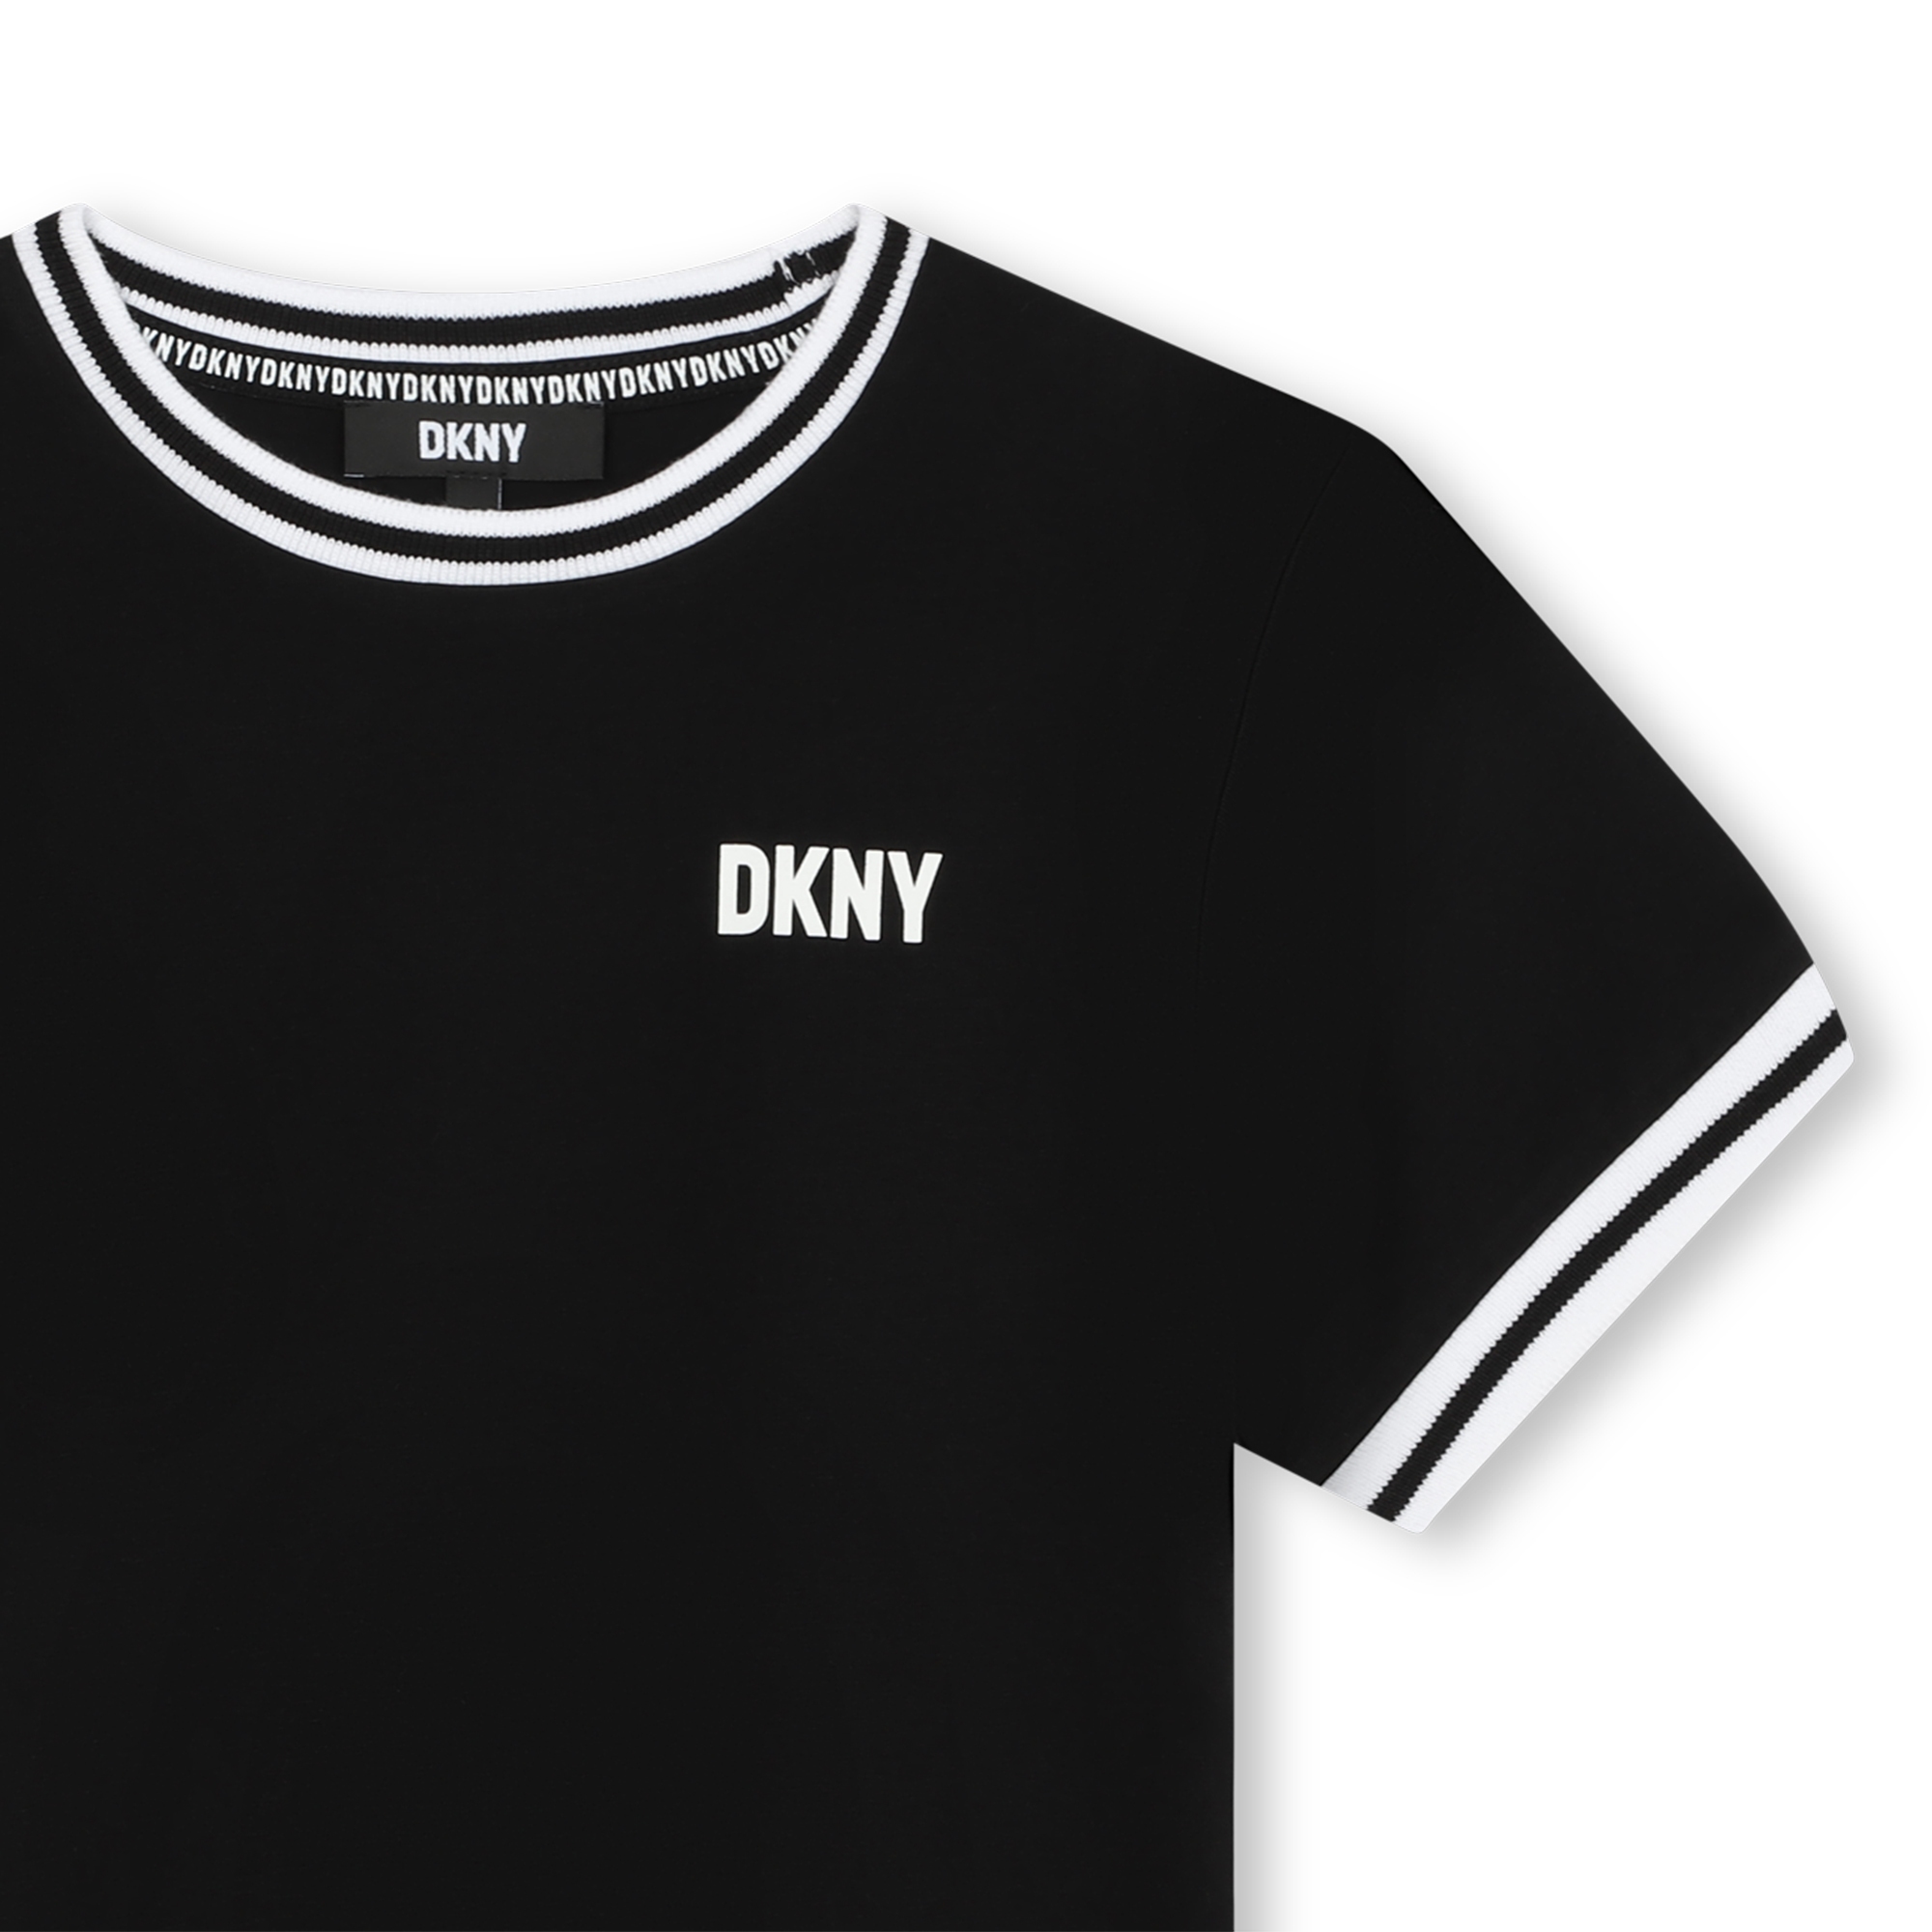 Kurzärmliges Baumwollshirt DKNY Für UNISEX